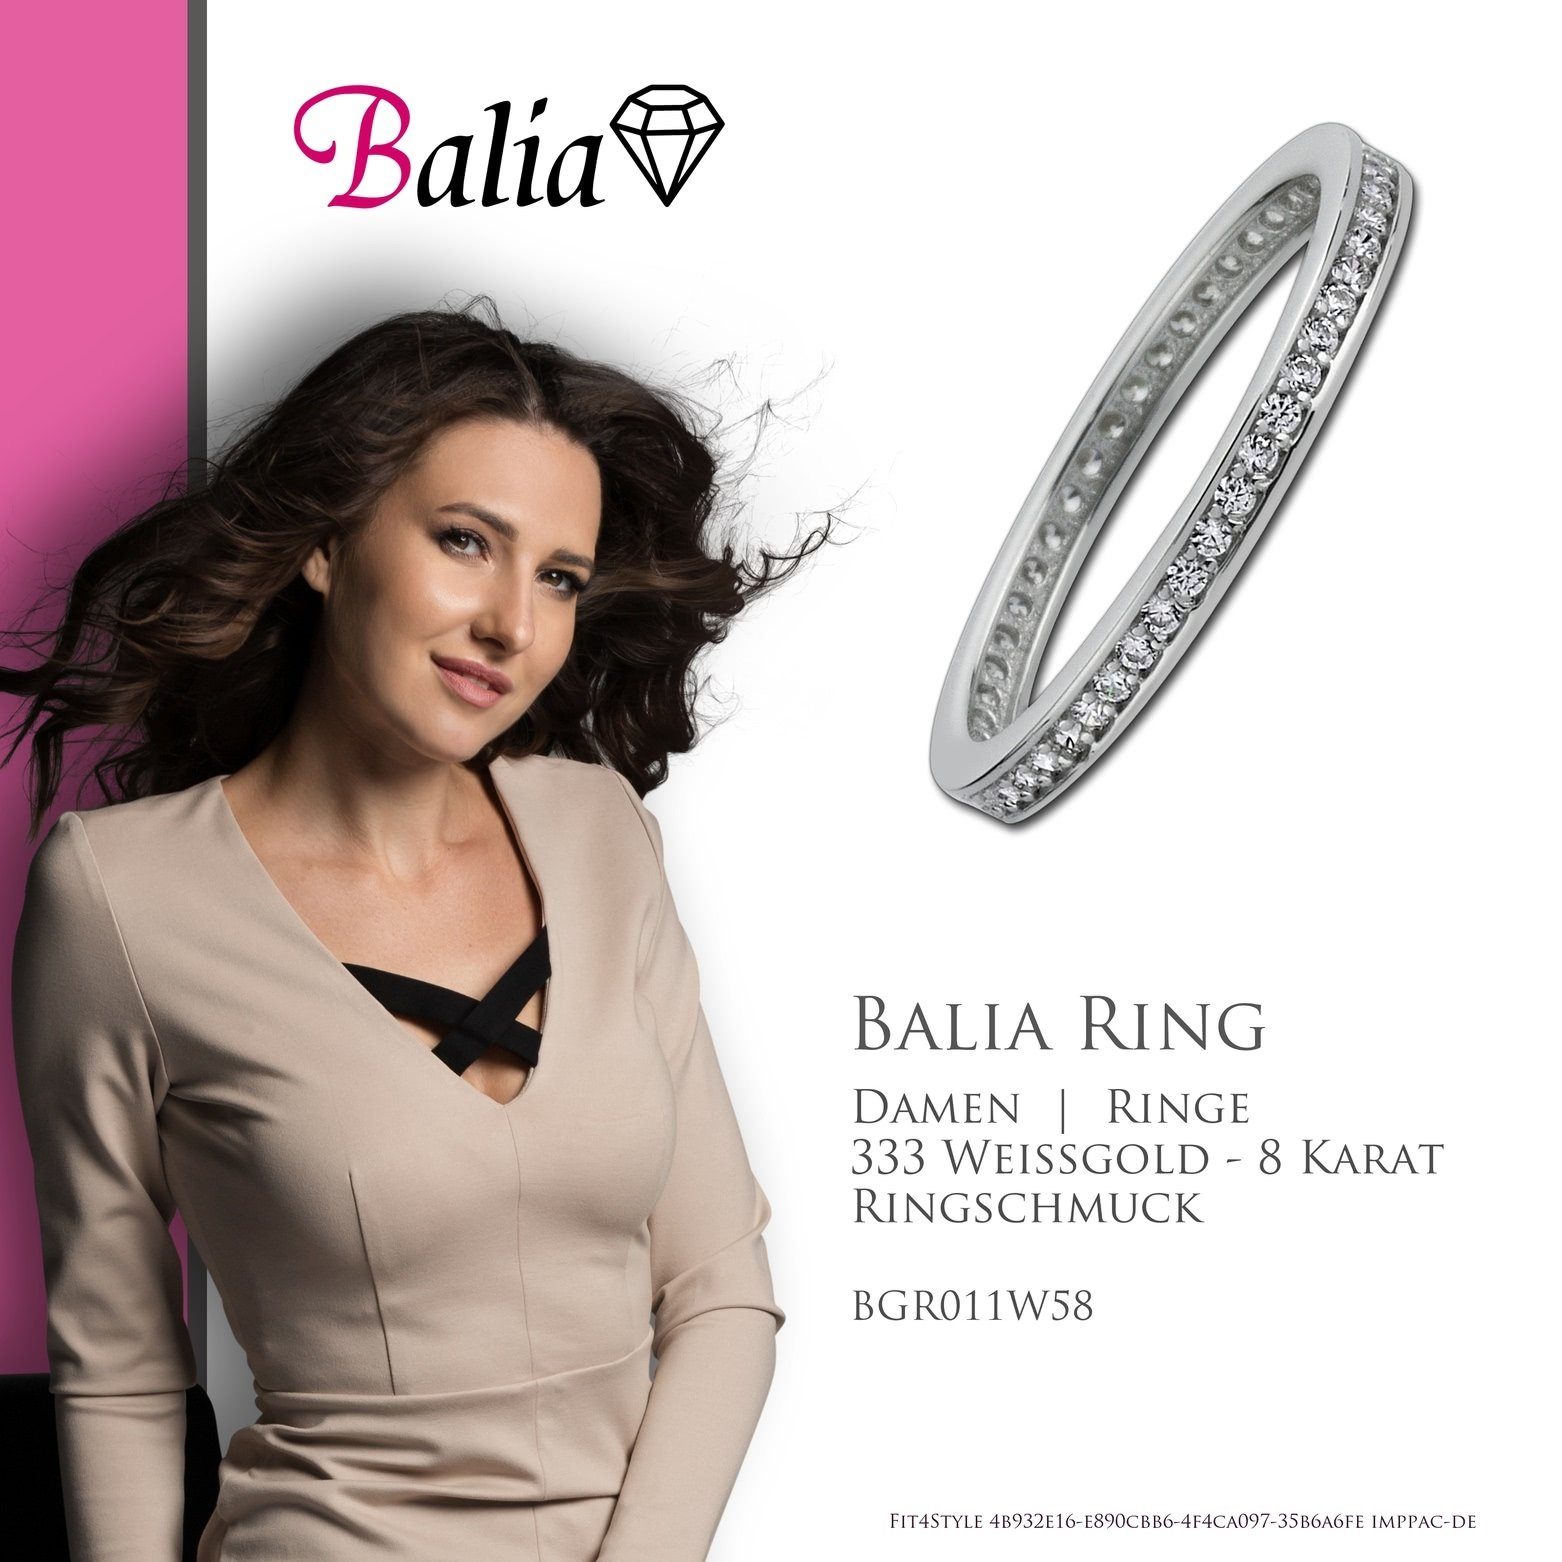 Damen Balia 8 Goldring Balia 8Karat Karat - Ring Gitzer, Ringe, Damen (Fingerring), 58 Gr.58 Weißgold (18,5) 333 Weißgold